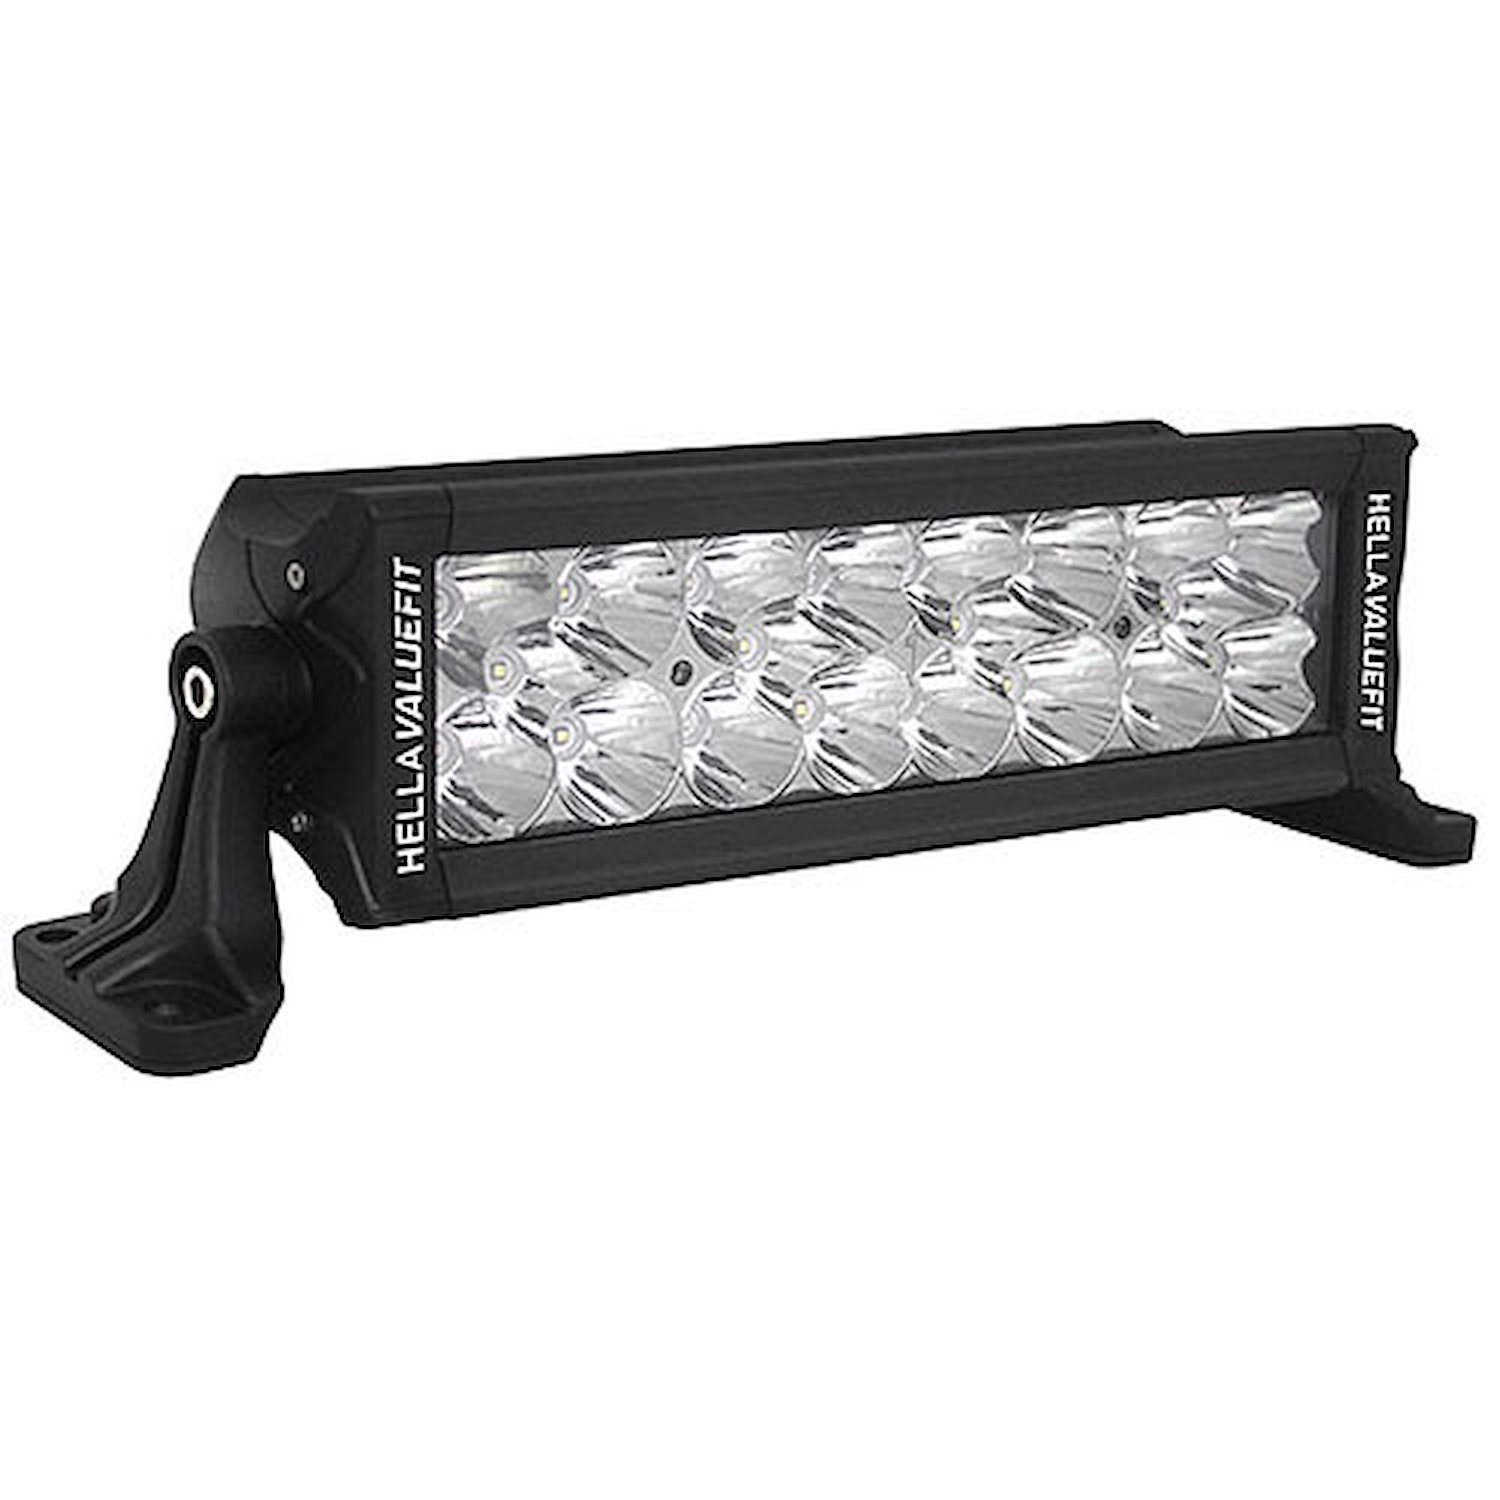 ValueFit Pro 20 LED Light Bar 12" Length